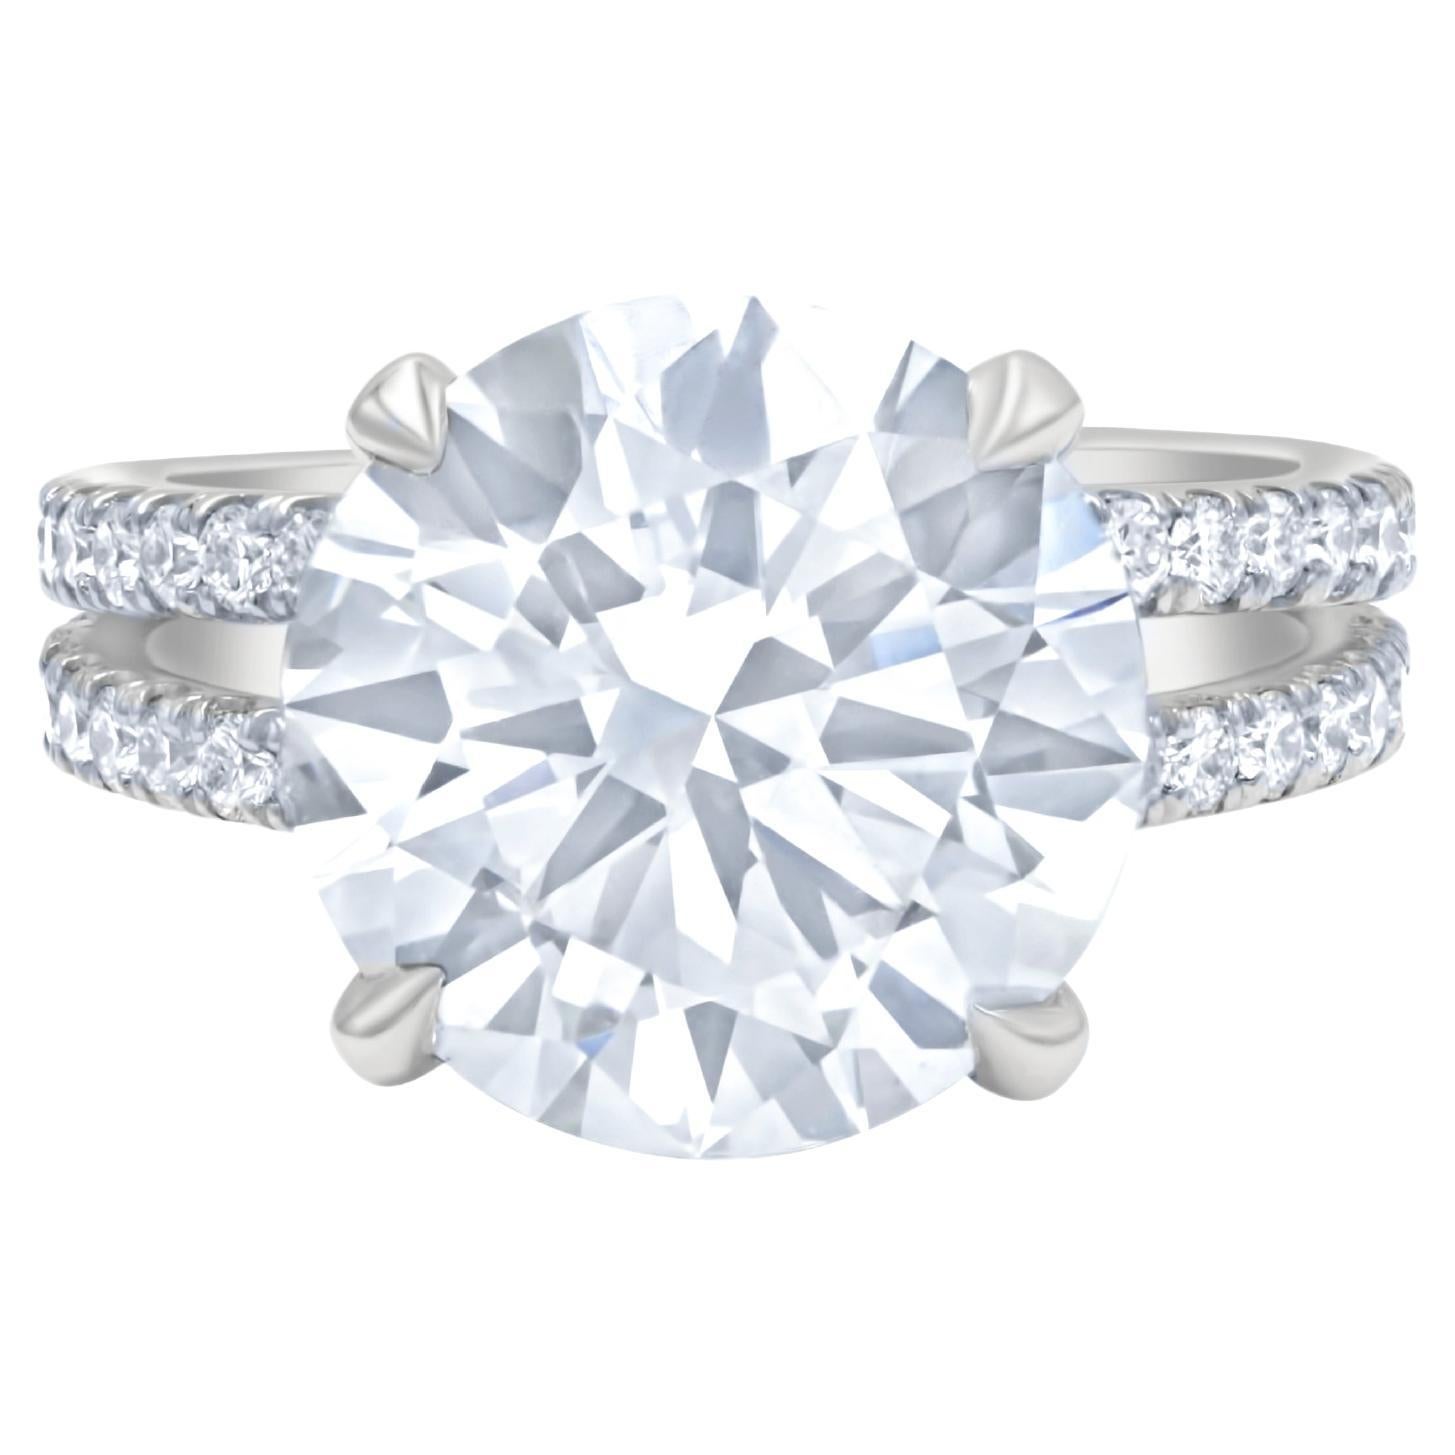 DIANA M. Platinum engagement ring featuring a center 6.30 ct round diamond